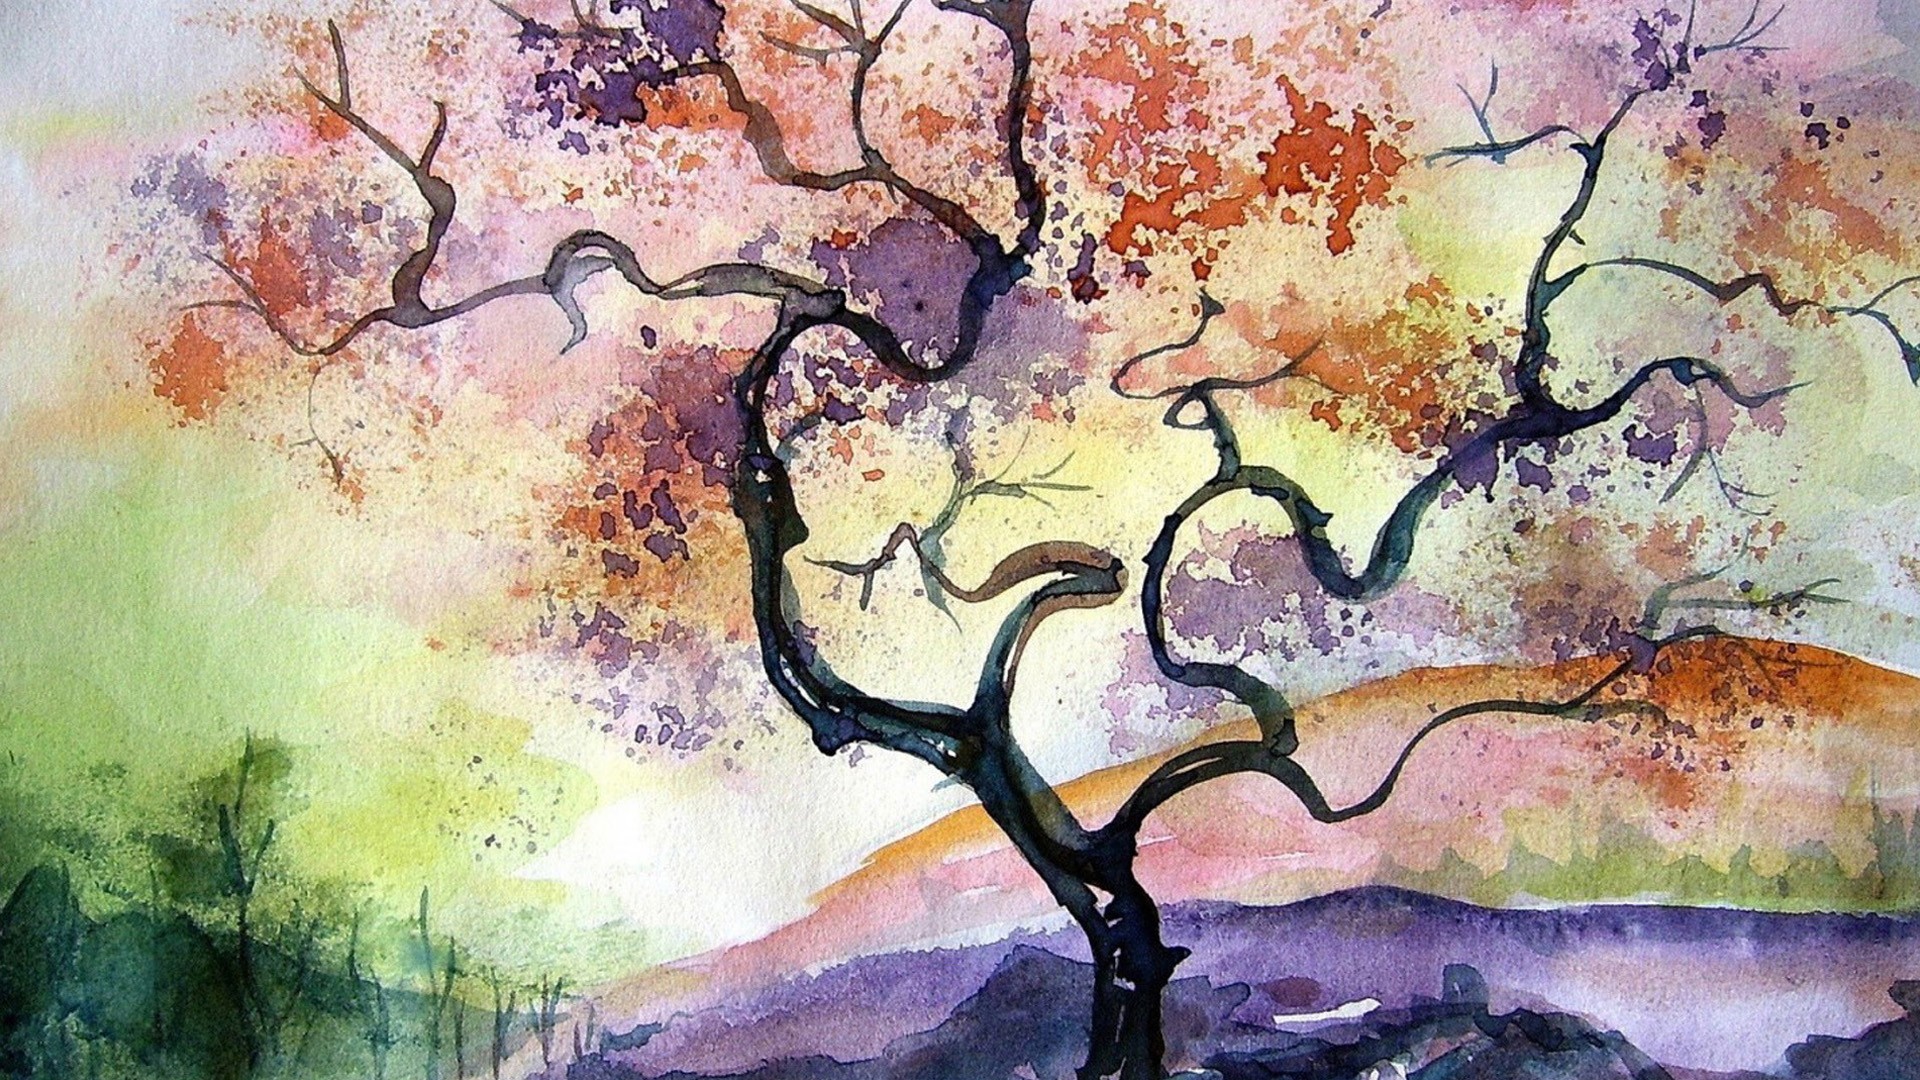 painting, Watercolor, Artwork, Warm colors, Nature, Landscape, Trees